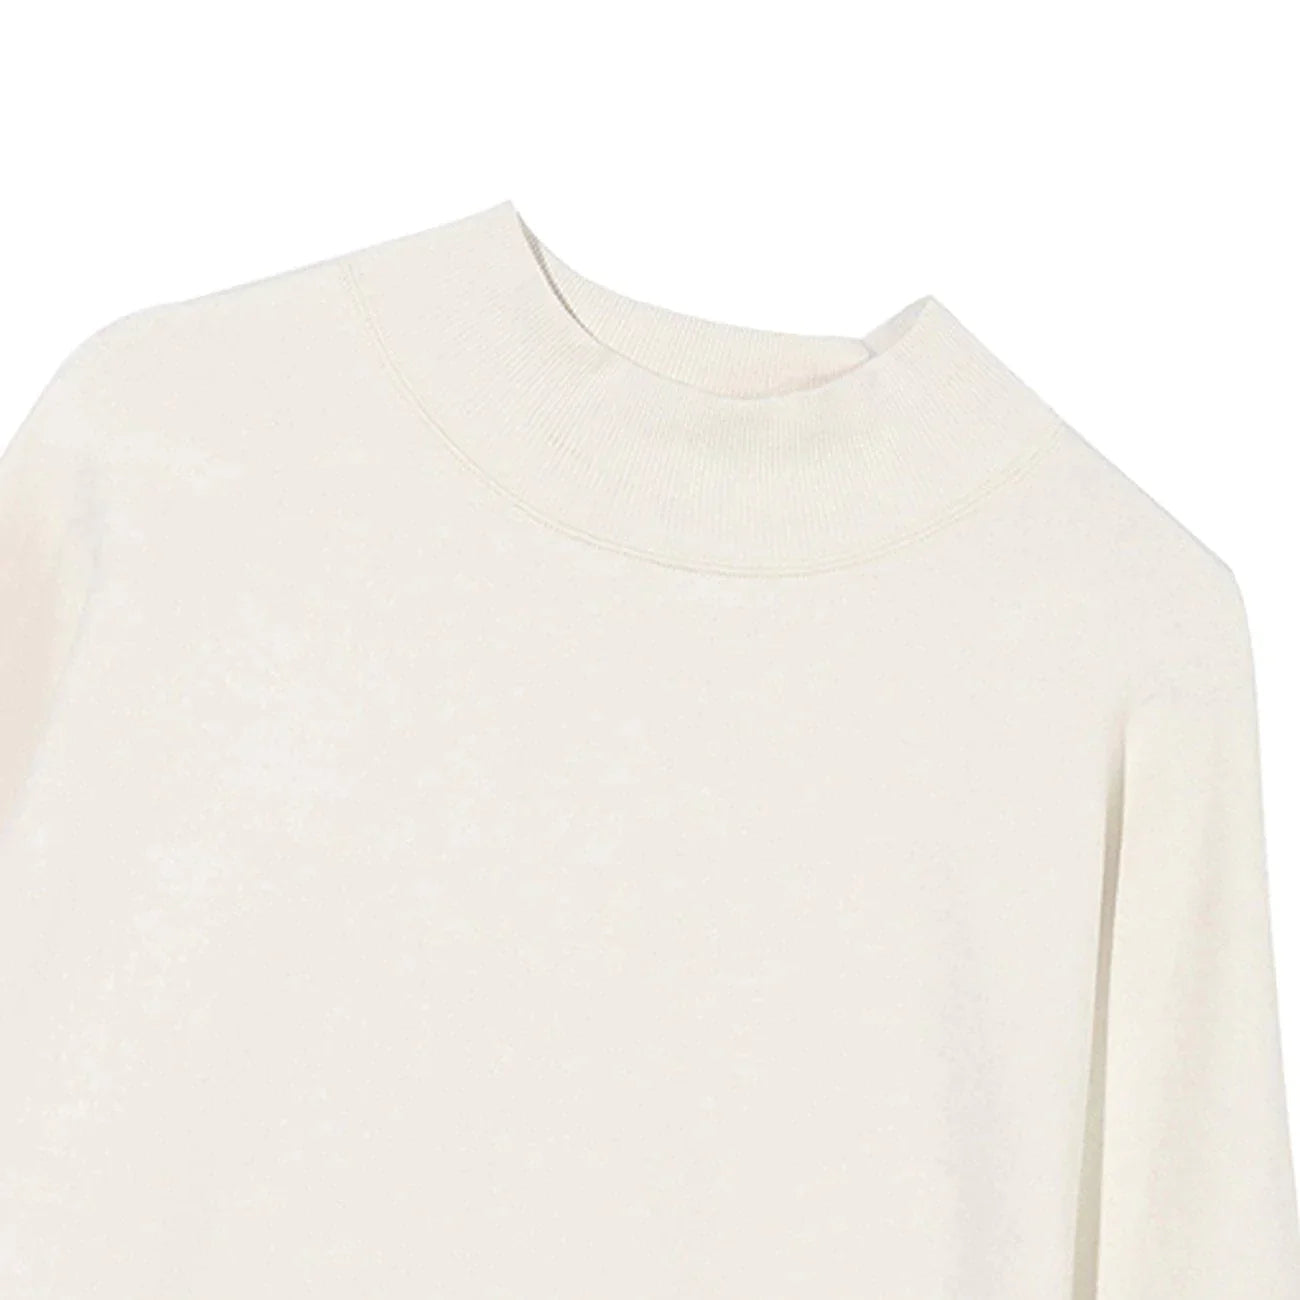 Majesda® - Letter Print Knit Sweater outfit ideas streetwear fashion